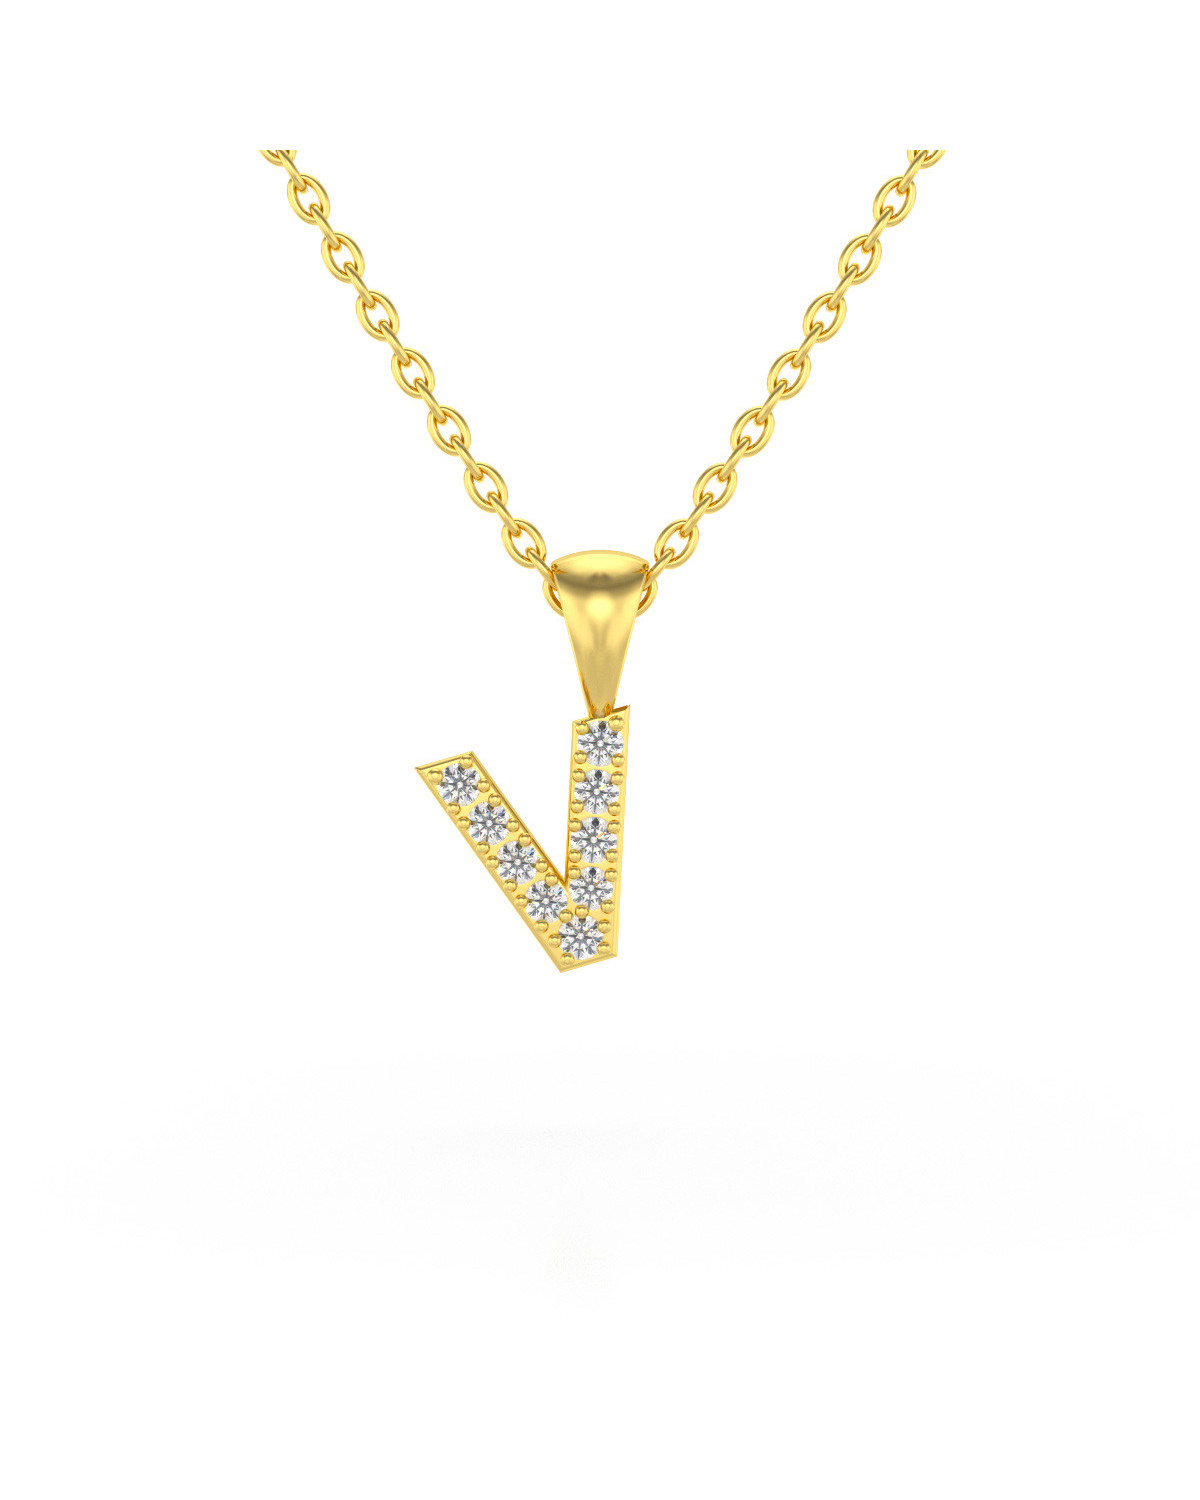 Collier Pendentif Lettre V Or Jaune Diamant Chaine Or incluse 0.72grs